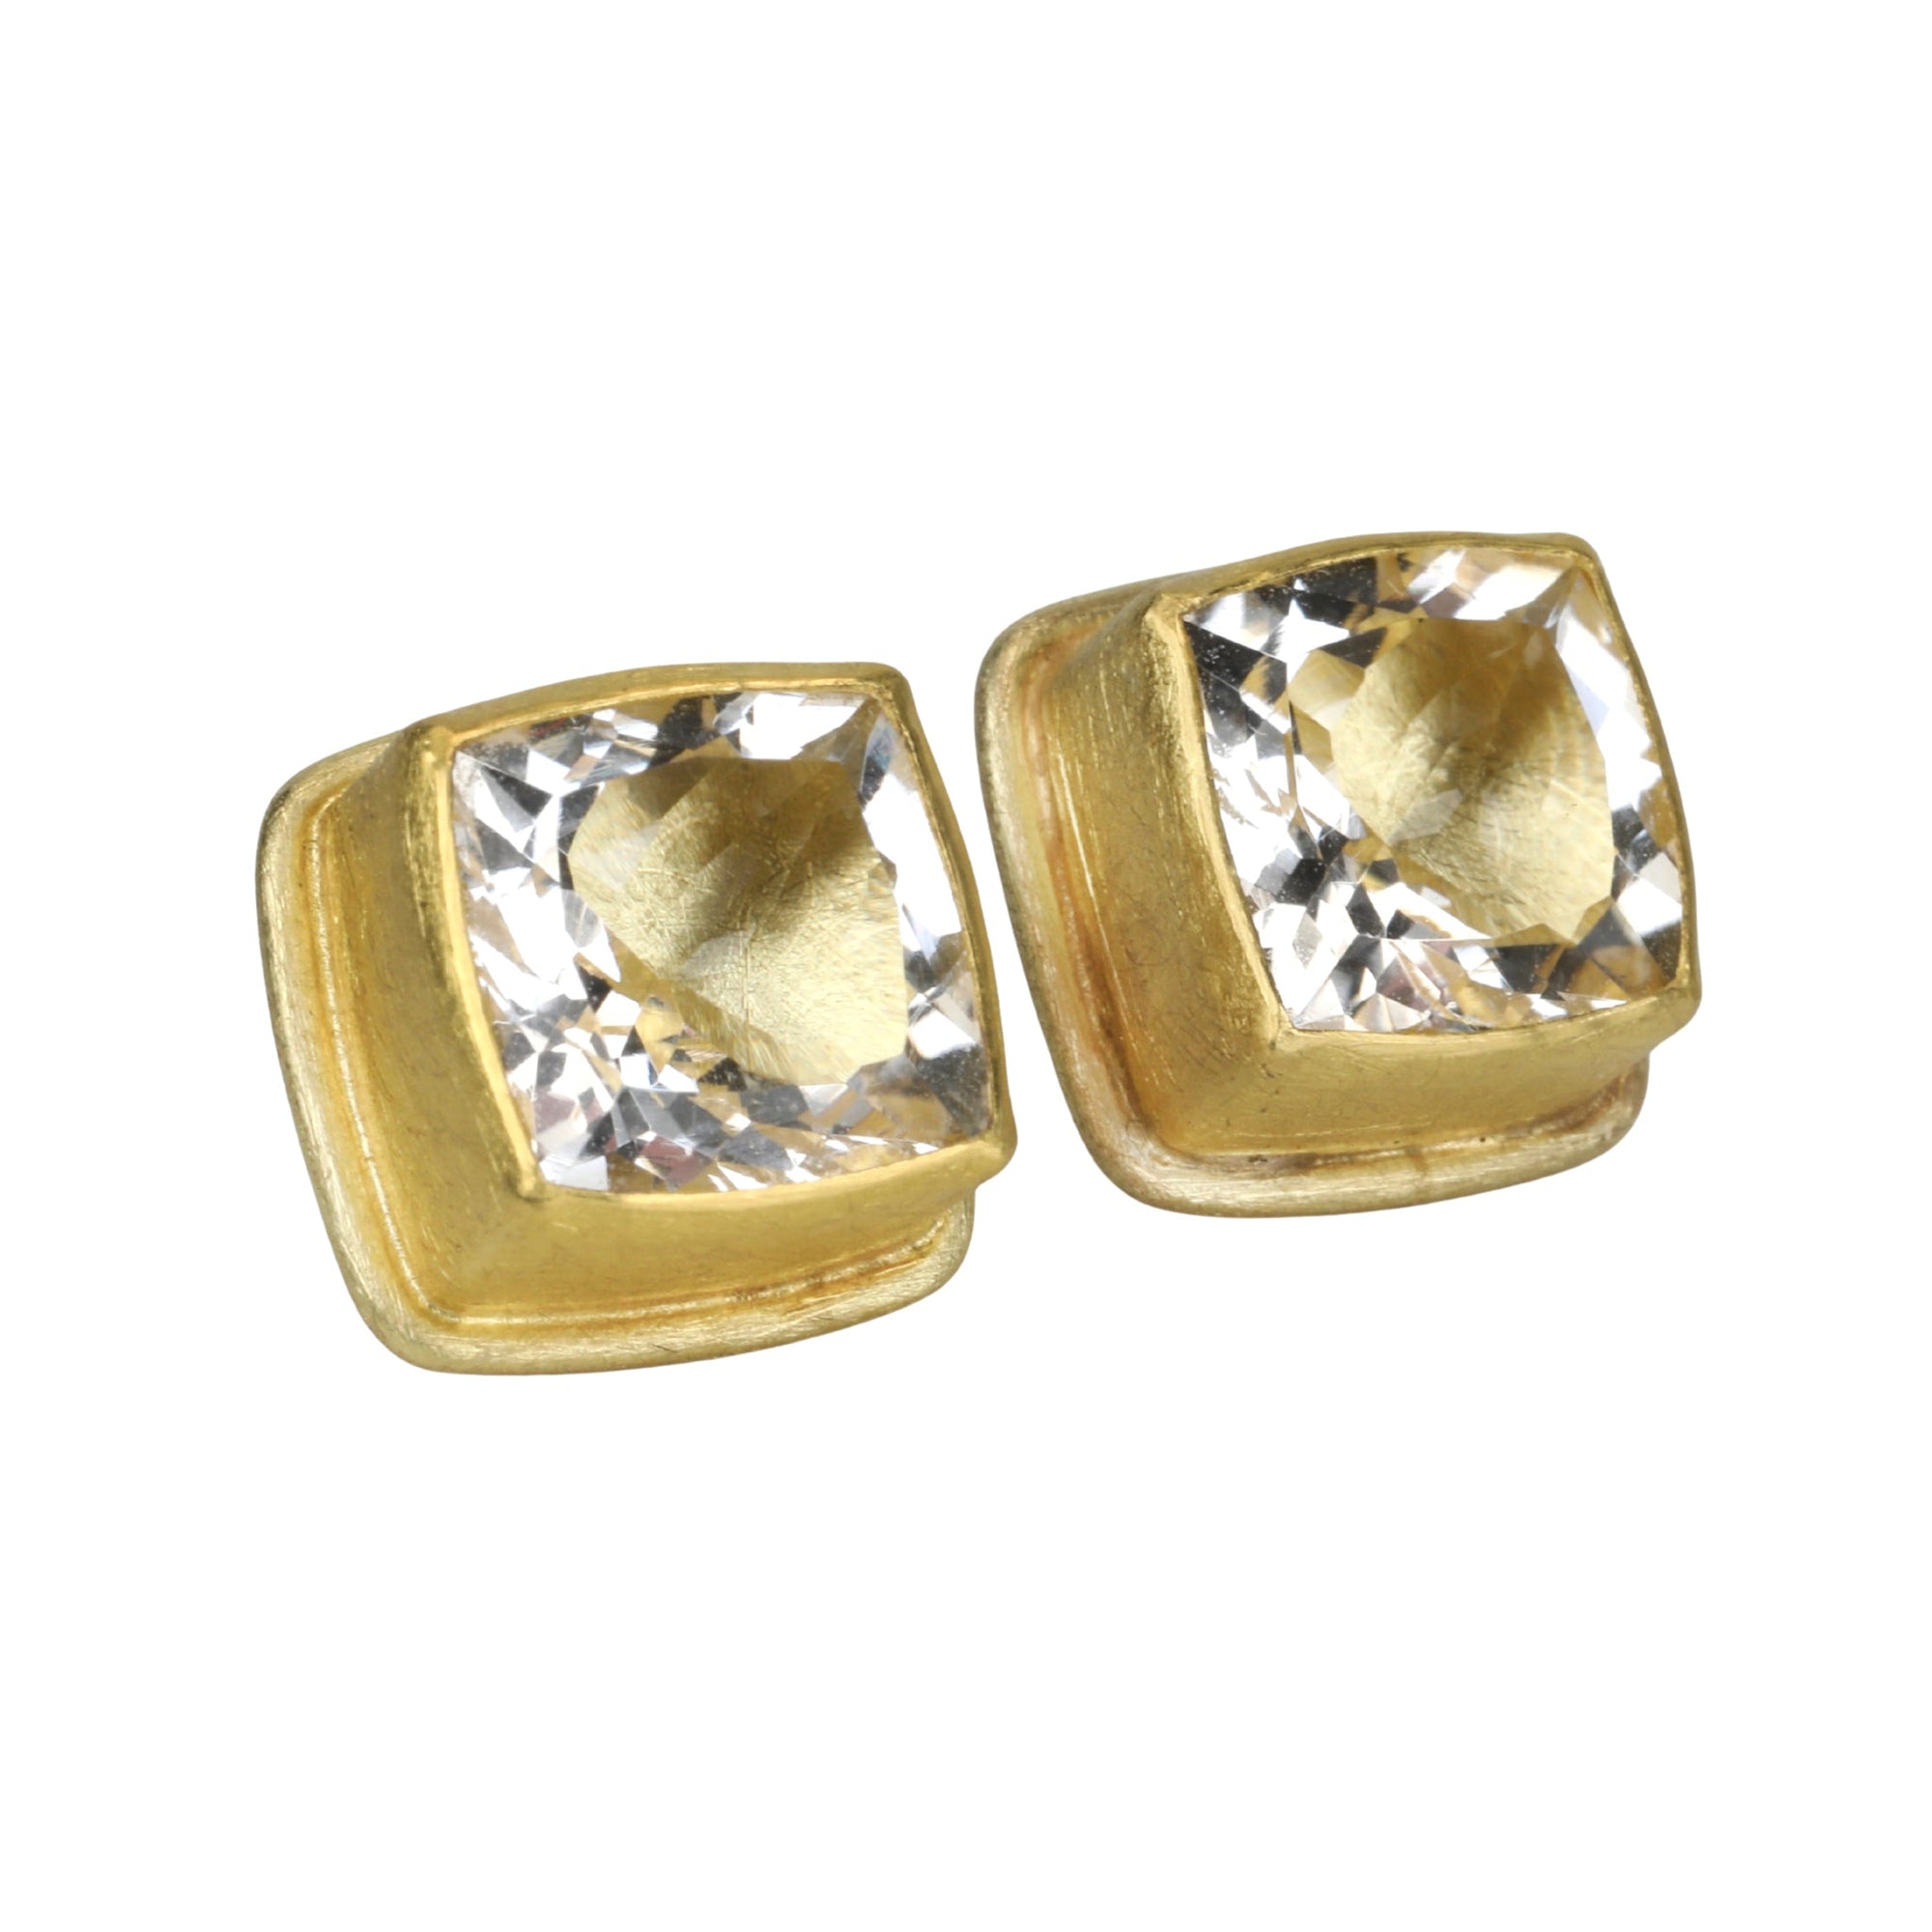 22K Gold Bezel-Set Faceted Clear Quartz Stud Earrings - Peridot Fine Jewelry - Petra Class